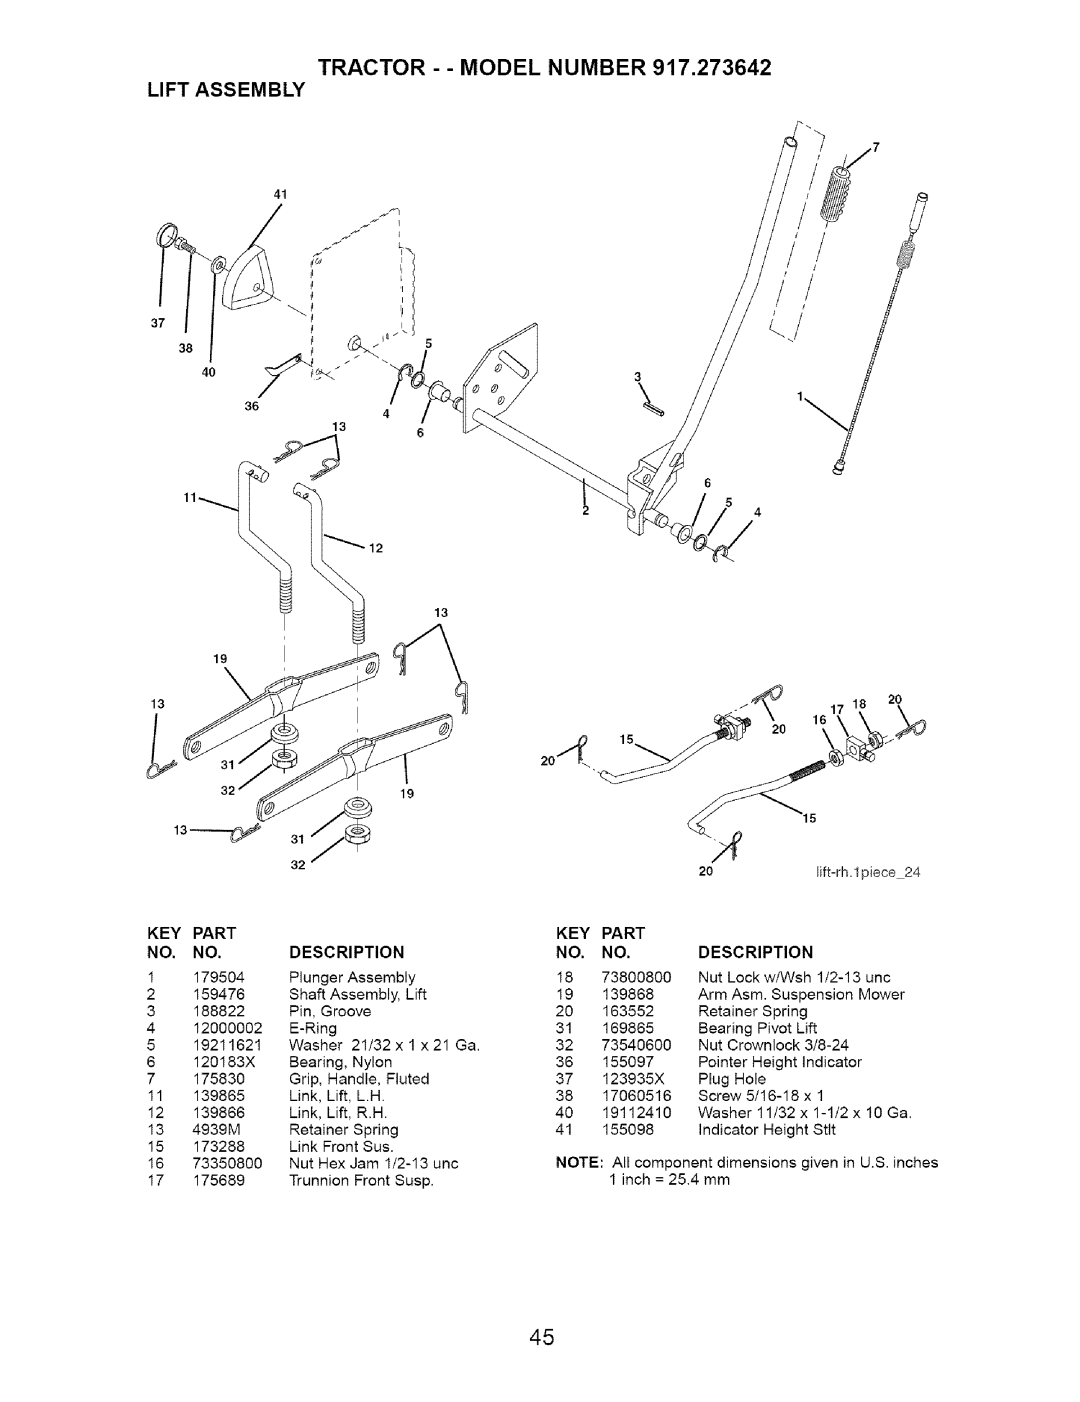 Craftsman 917.273642 manual TRACTOR - - MODEL NUMBER 917,273642 LIFT ASSEMBLY, 38 40, Part, Description 